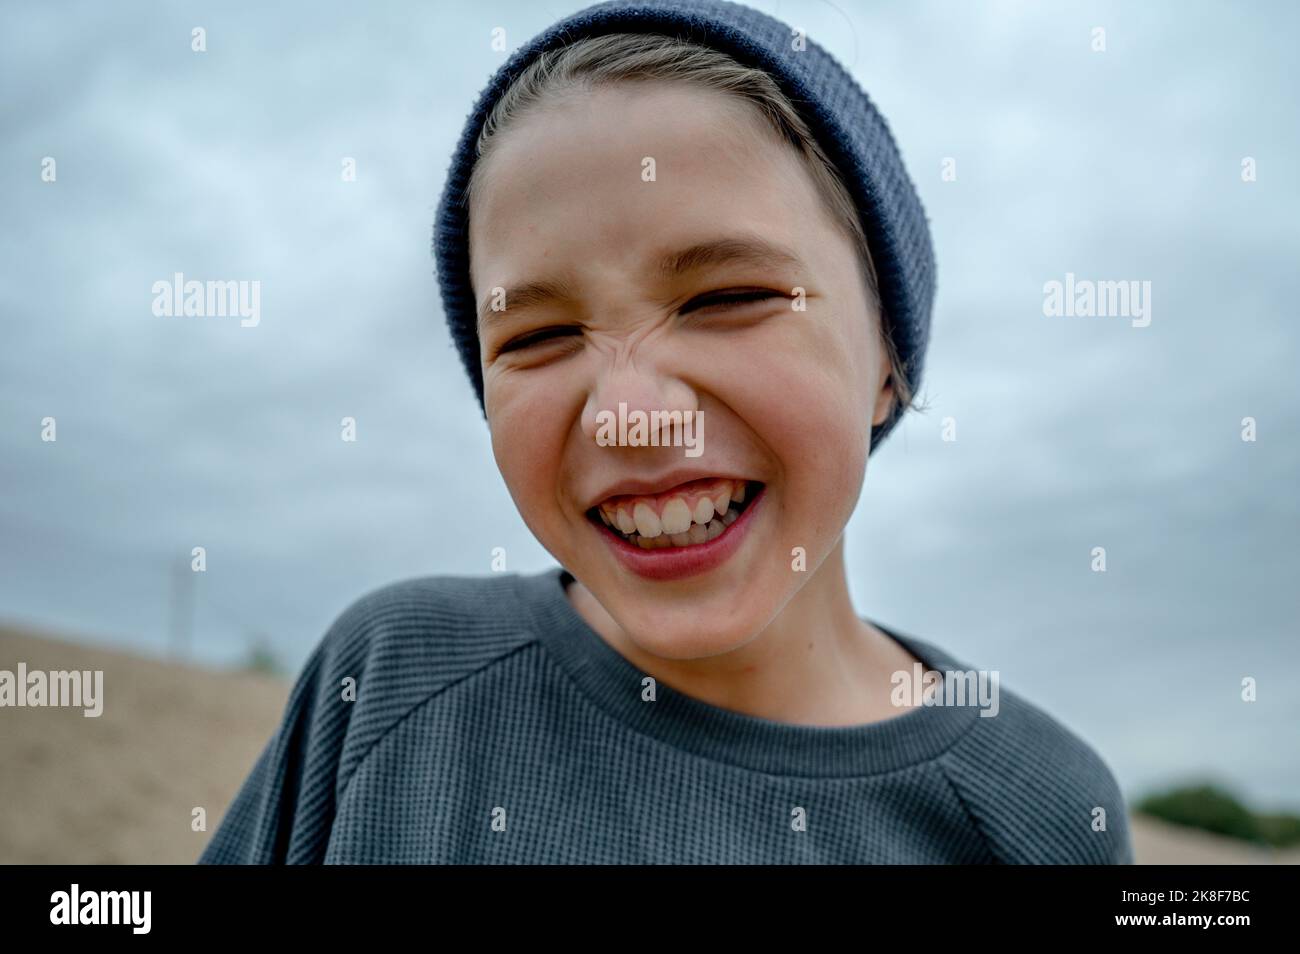 Smiling boy wearing knit hat Stock Photo